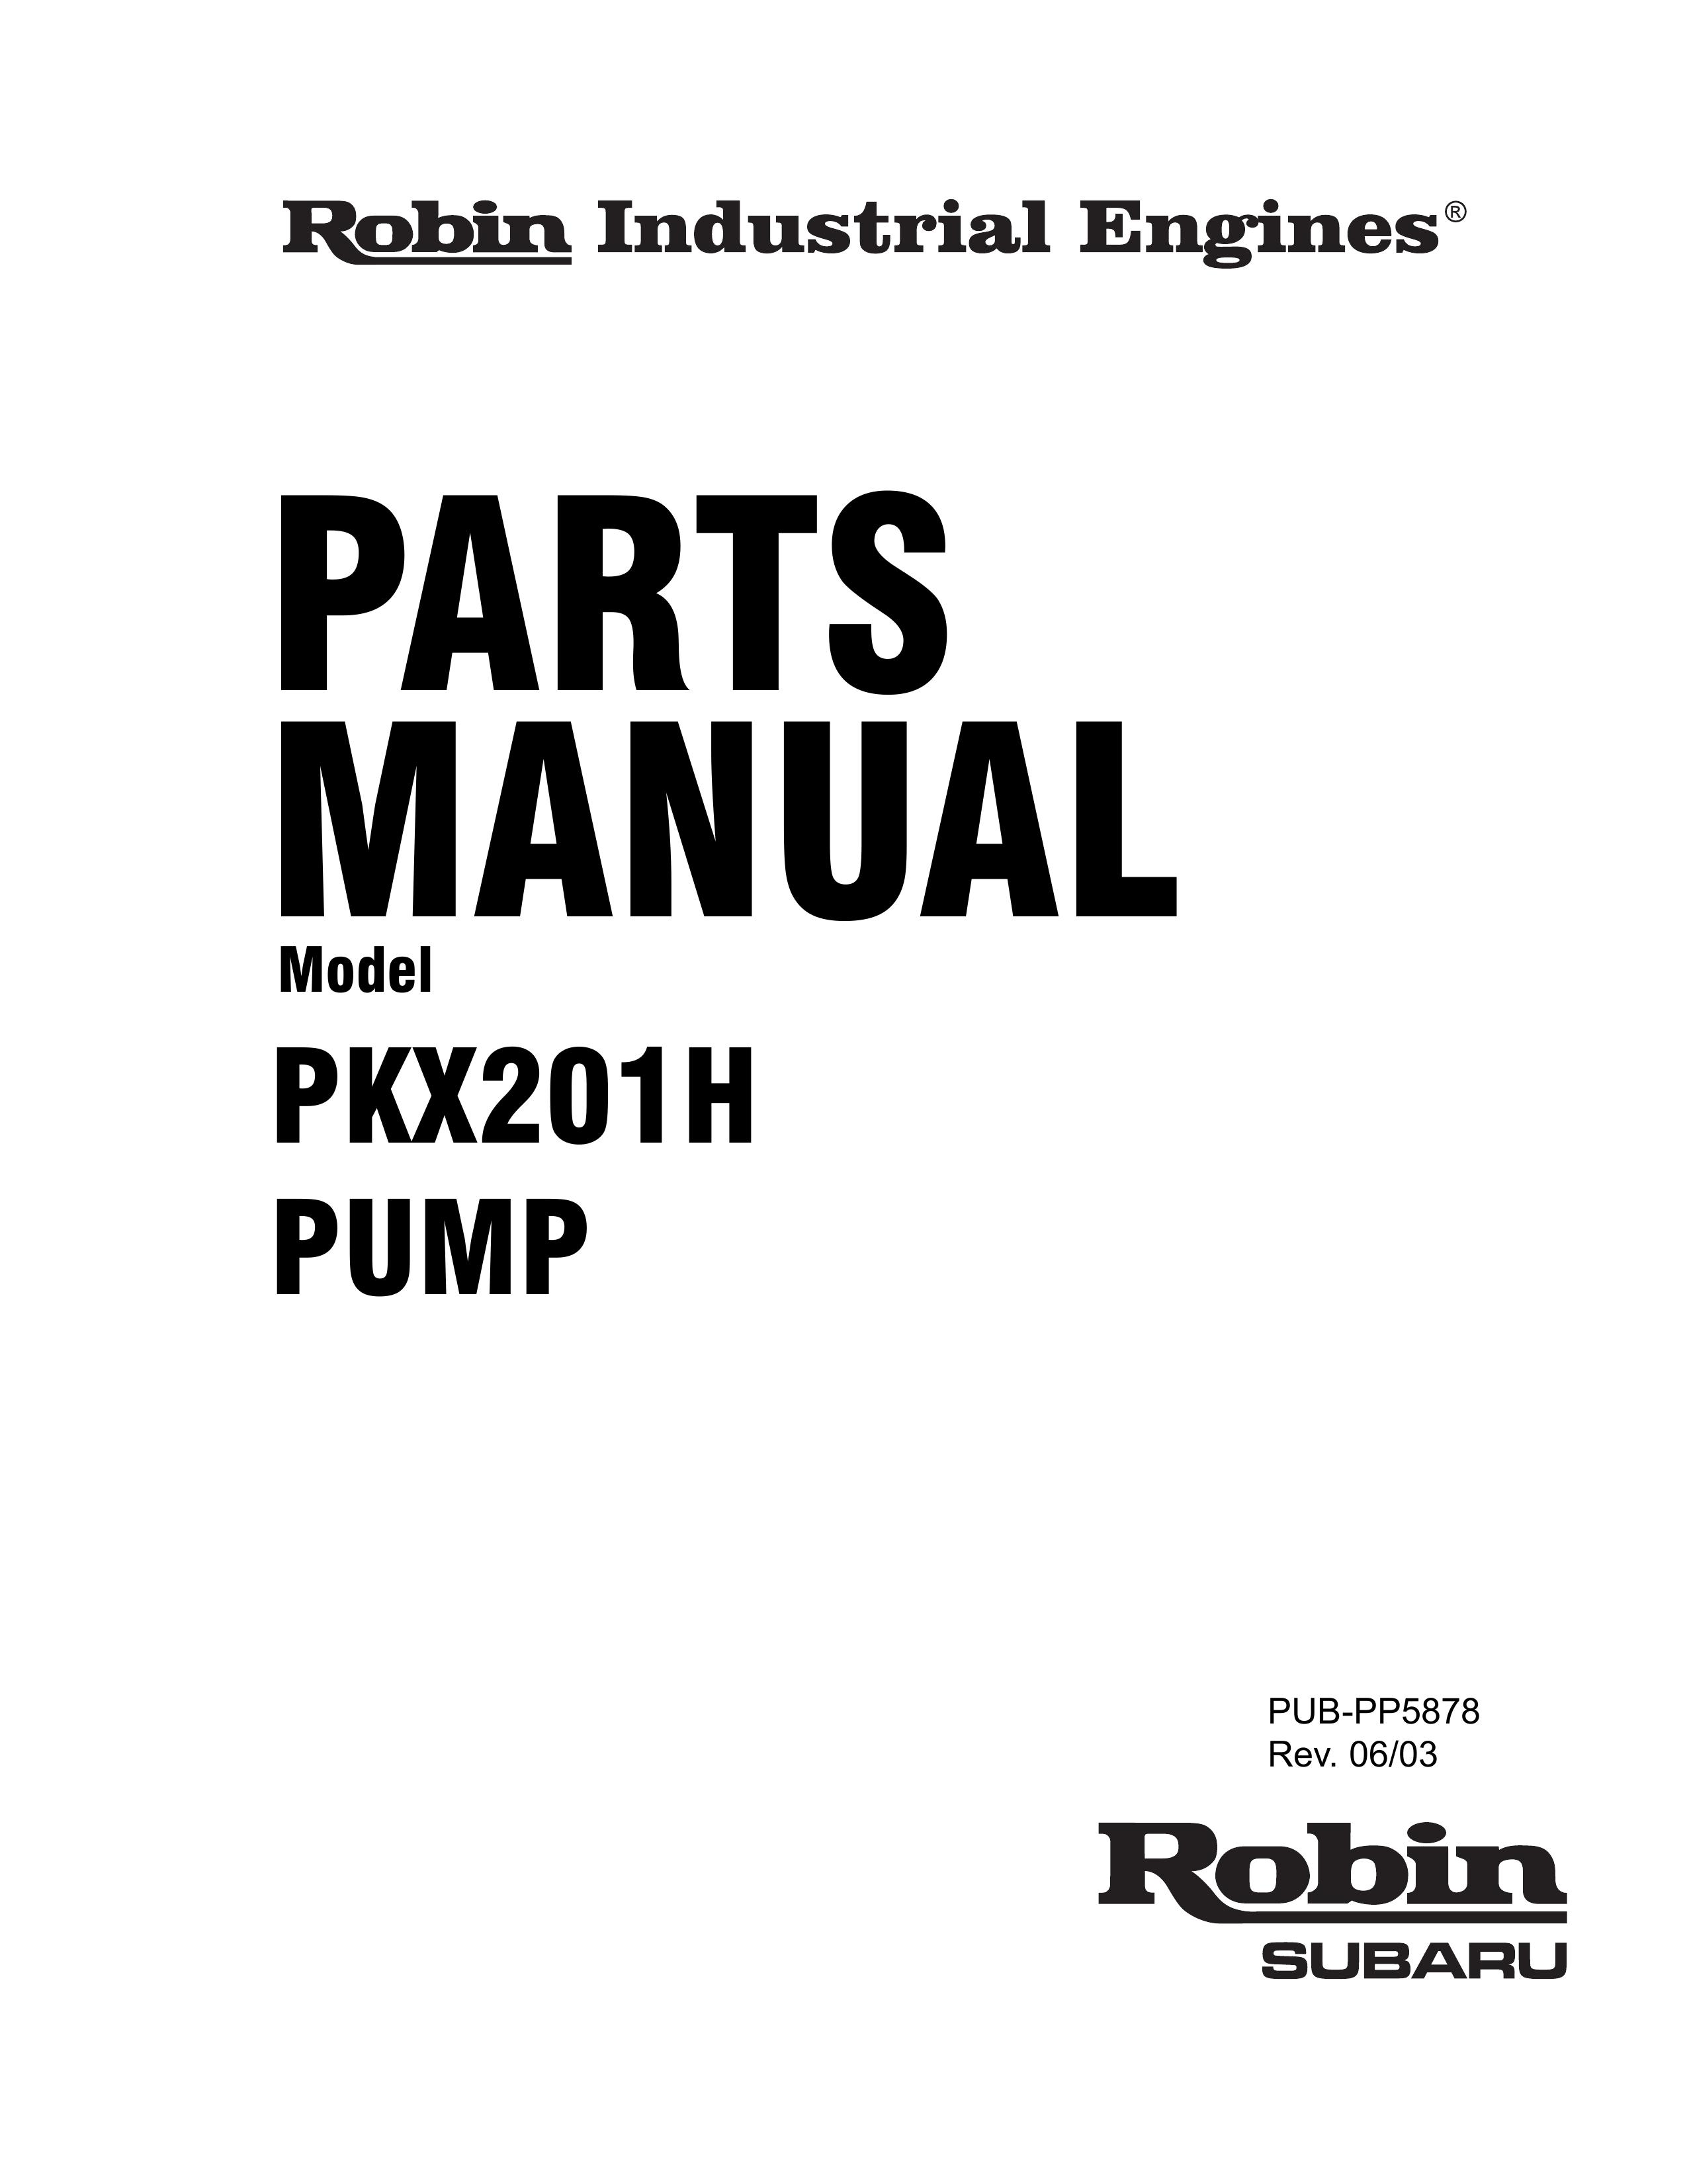 Subaru Robin Power Products PKX201H Marine Sanitation System User Manual